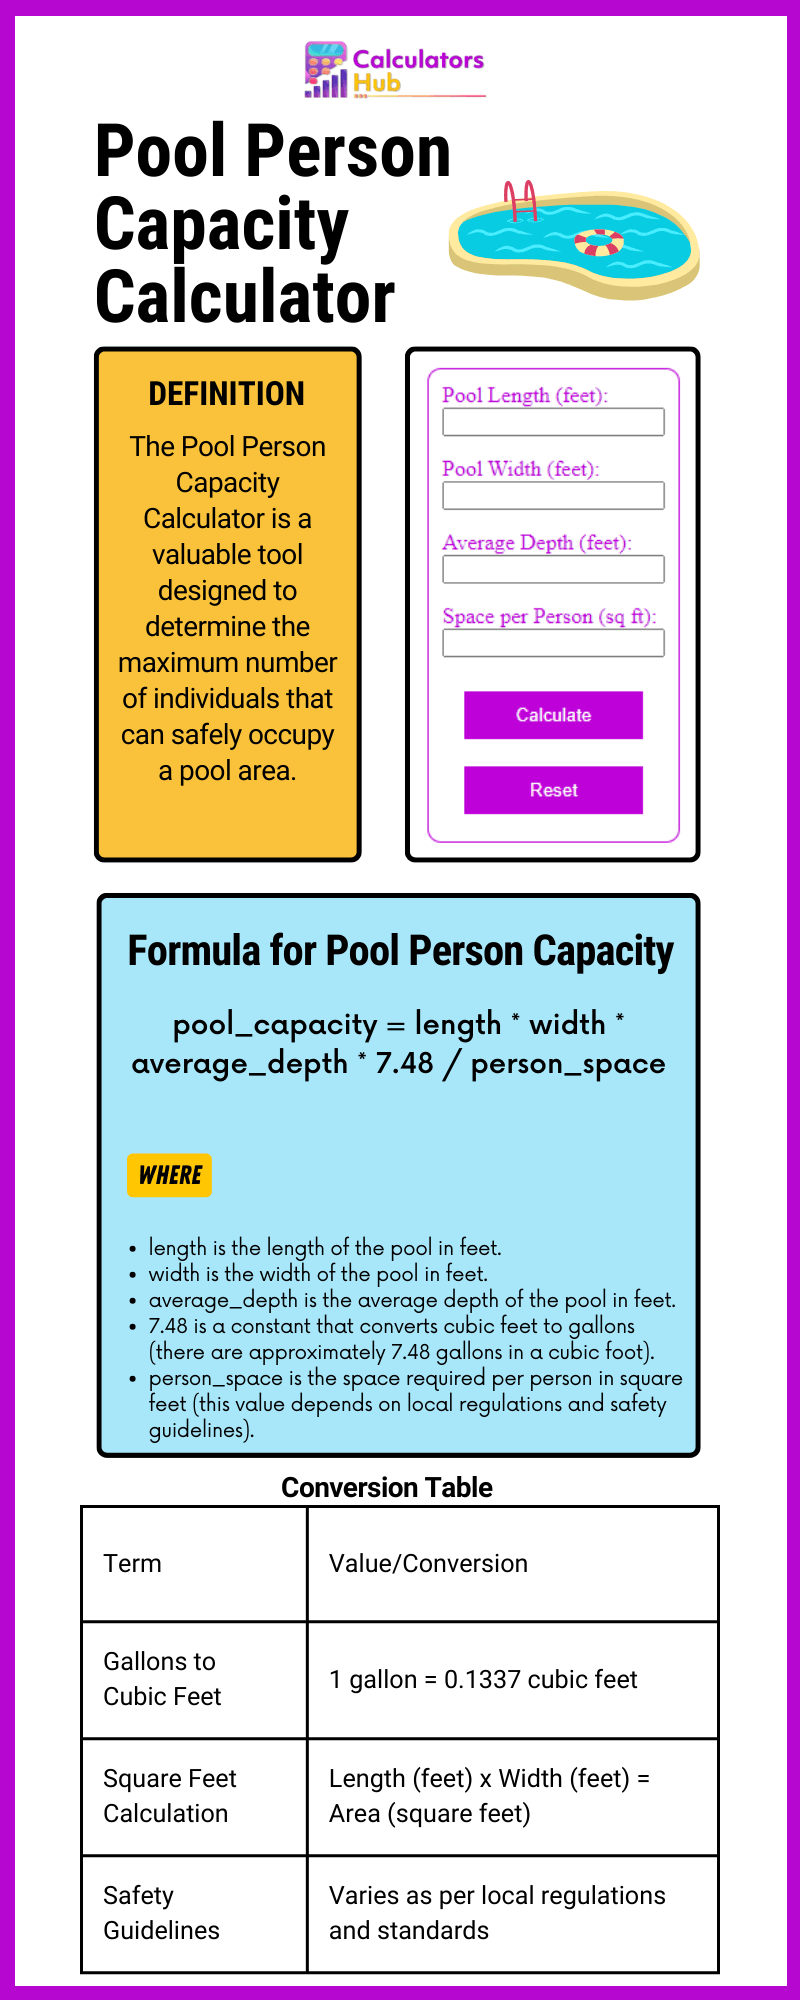 Pool Person Capacity Calculator